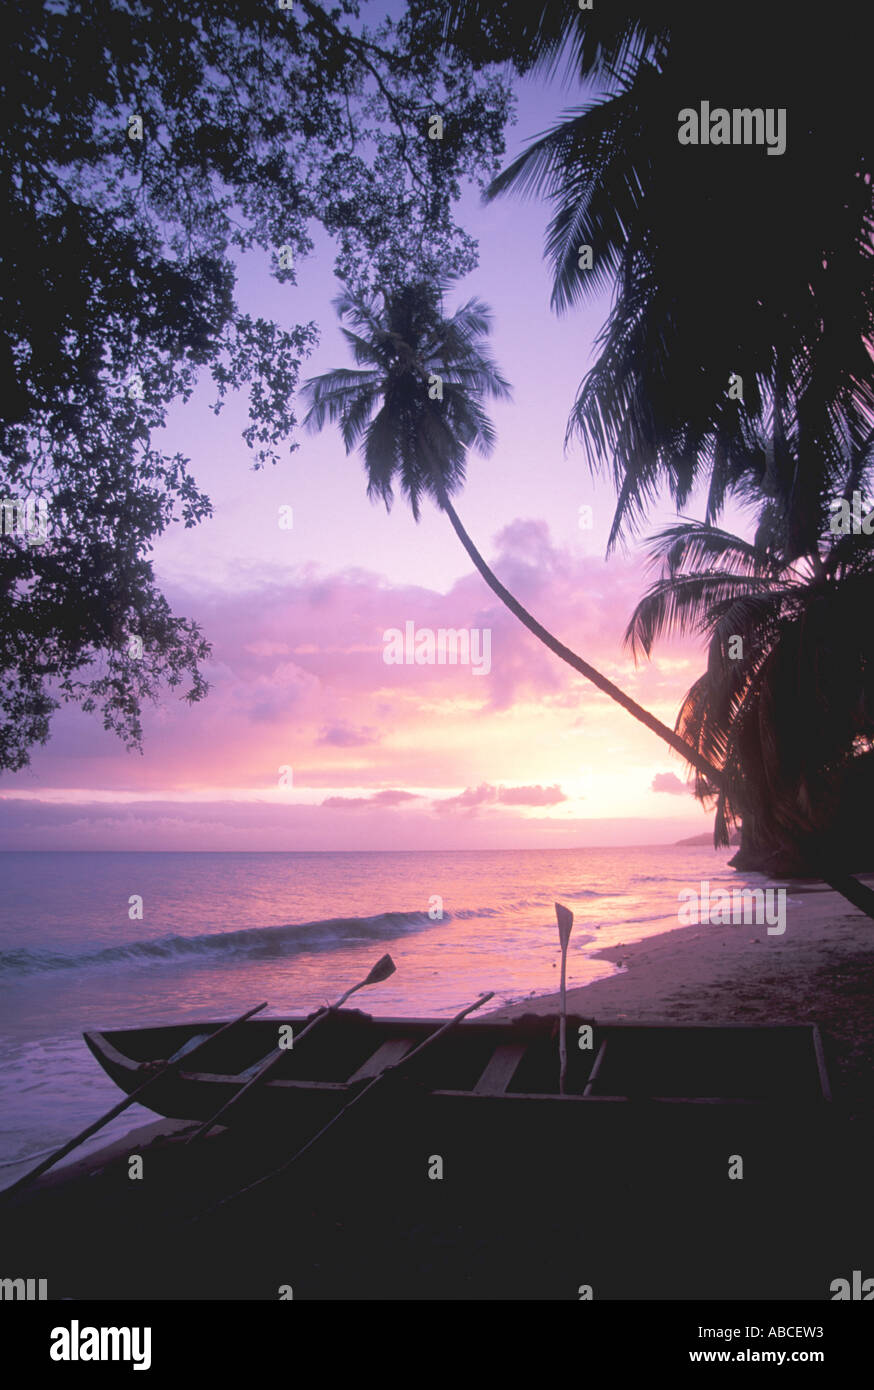 Halbinsel Samana Dominikanische Republik Strand Angeln Boot Silhouette Sonnenuntergang Stockfoto